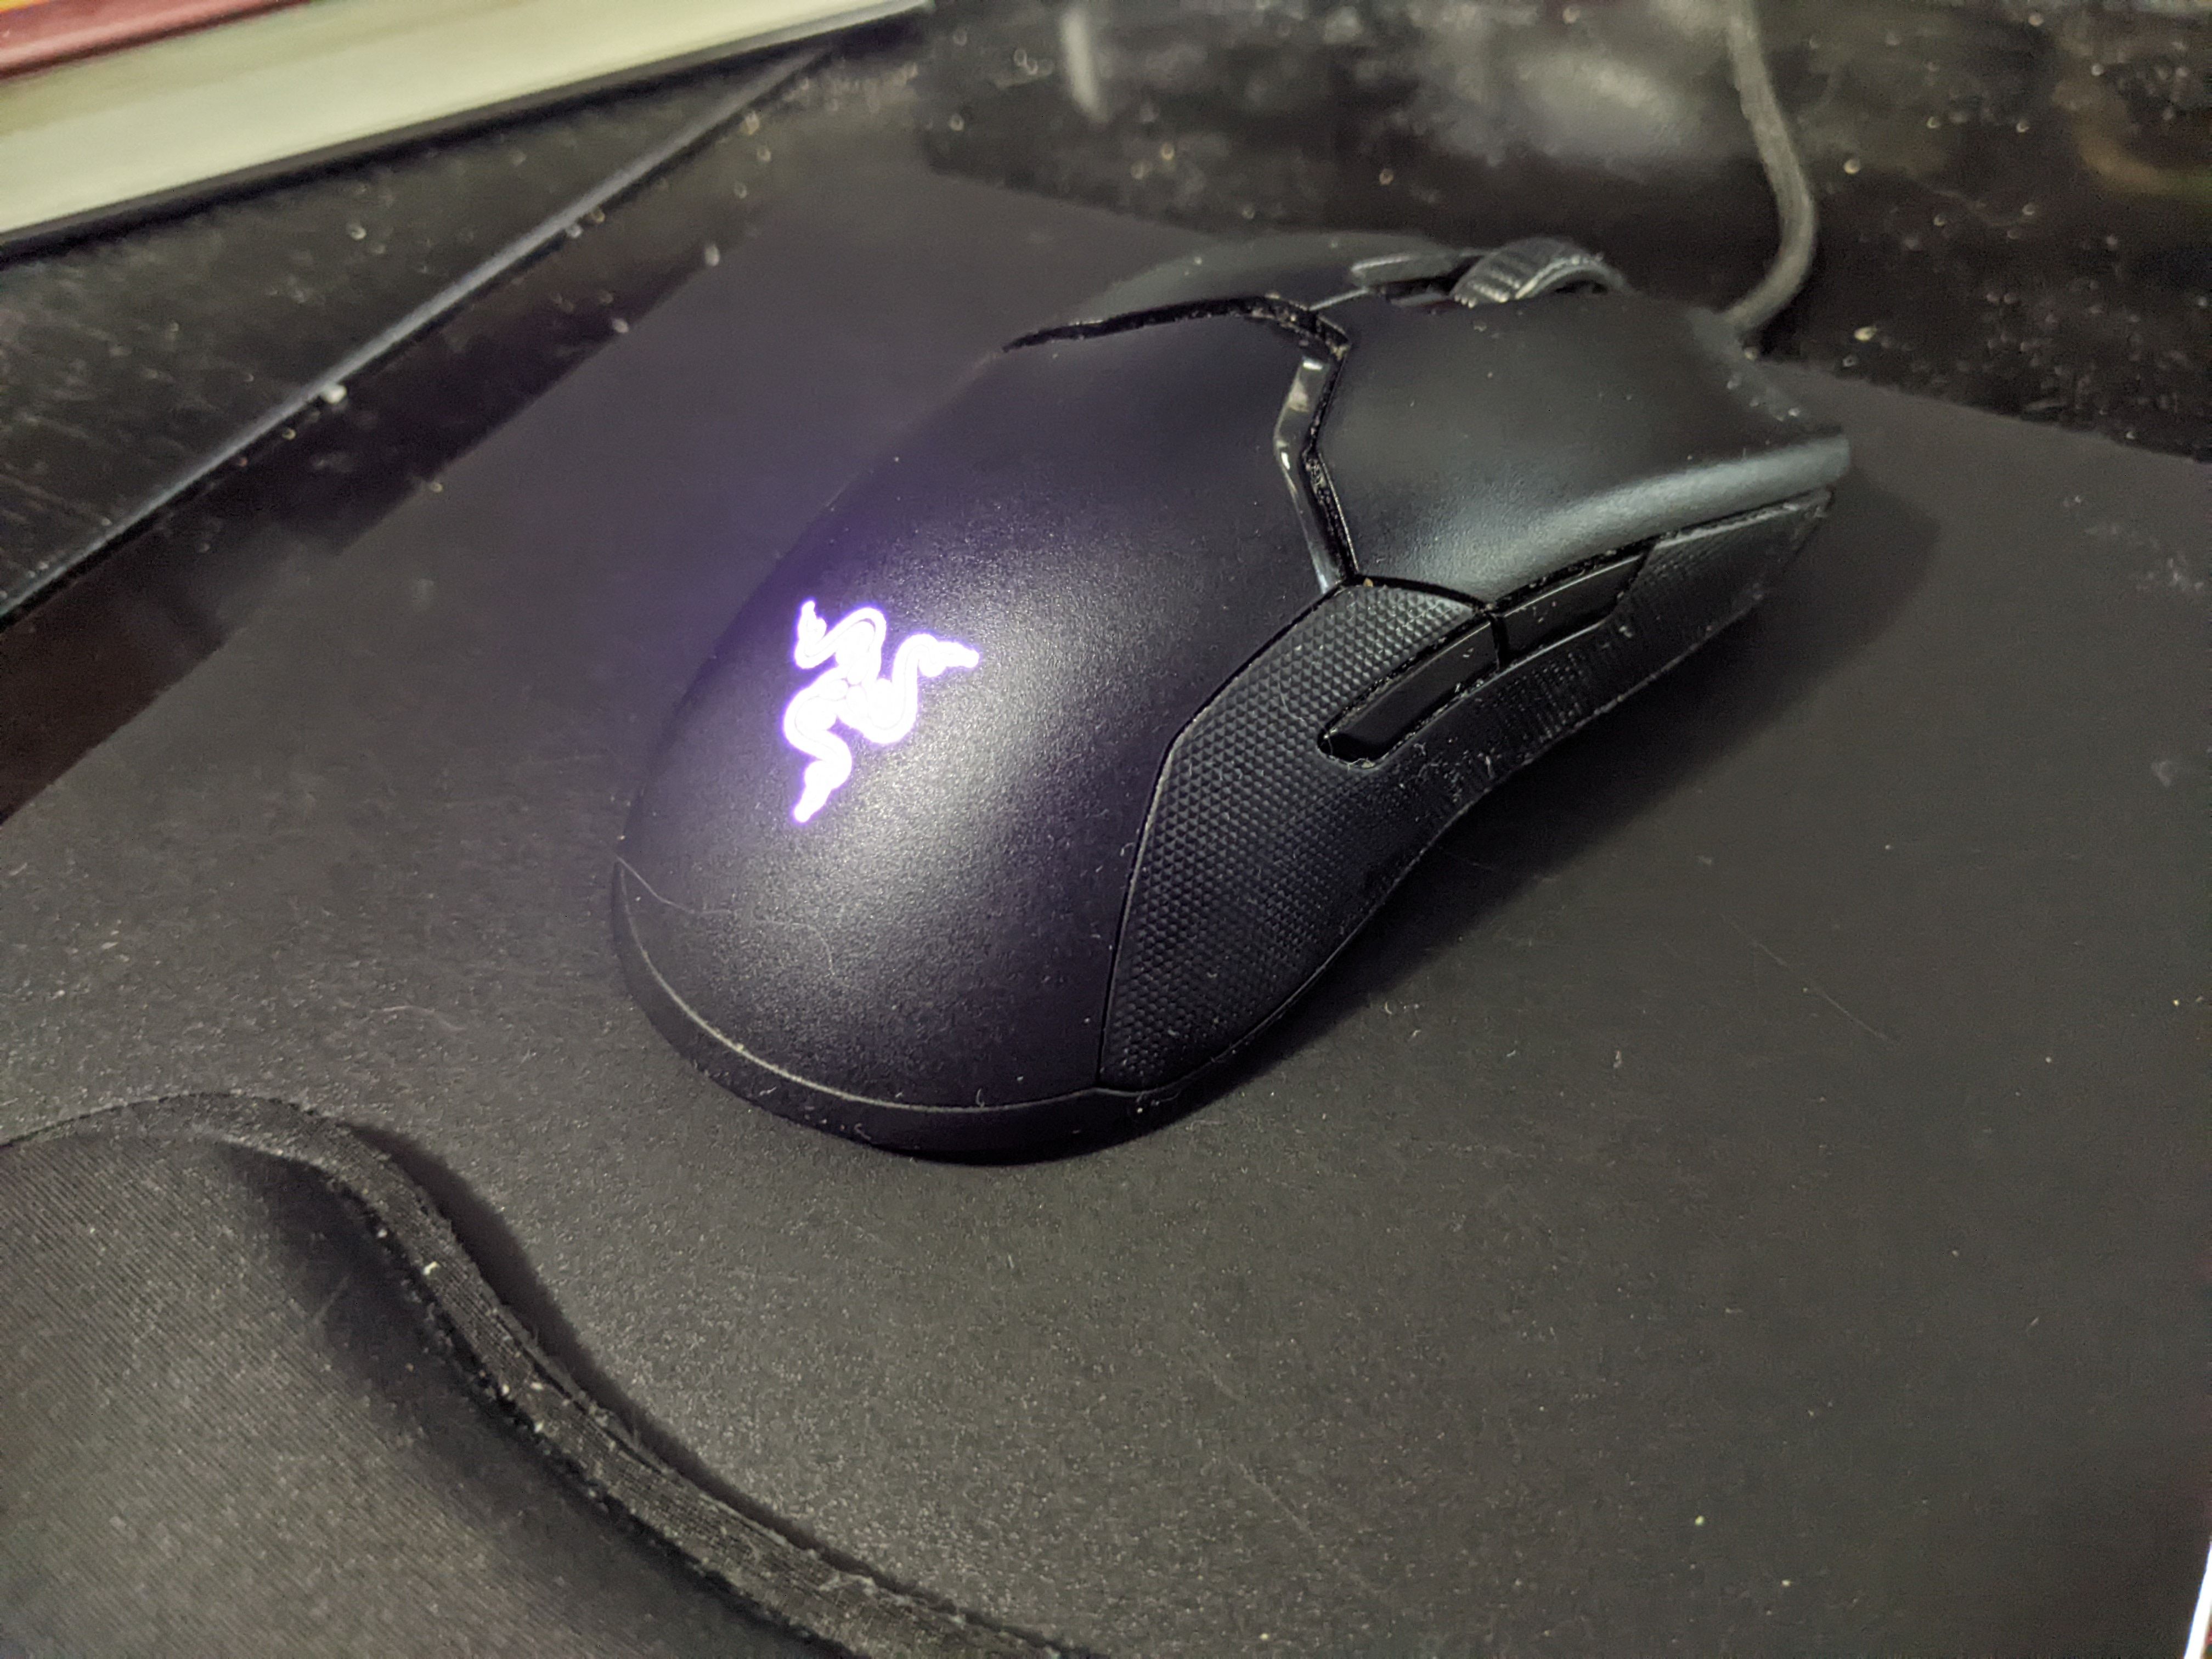 The Razer Viper Ultralight Ambidextrous PC gaming mouse.